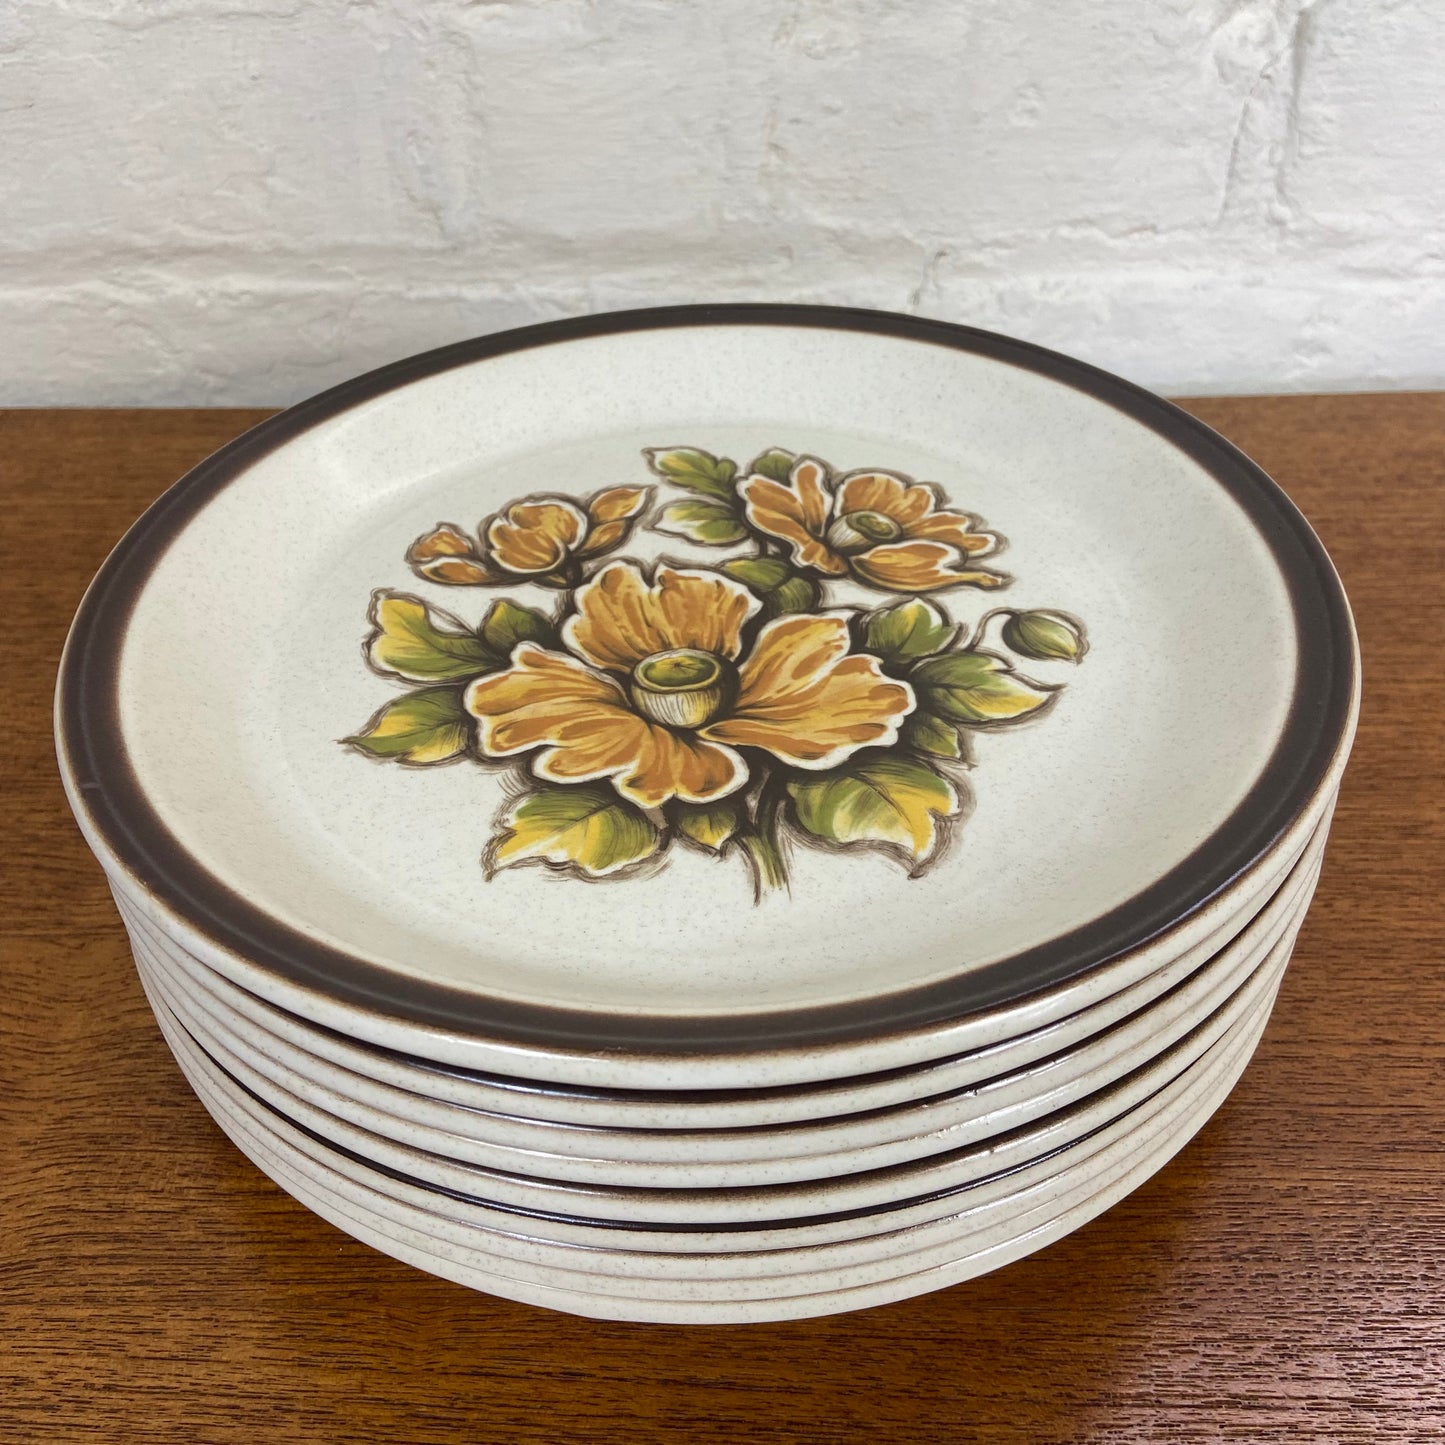 Vintage Barratts of Staffordshire "Nutwood" Dinner Plates